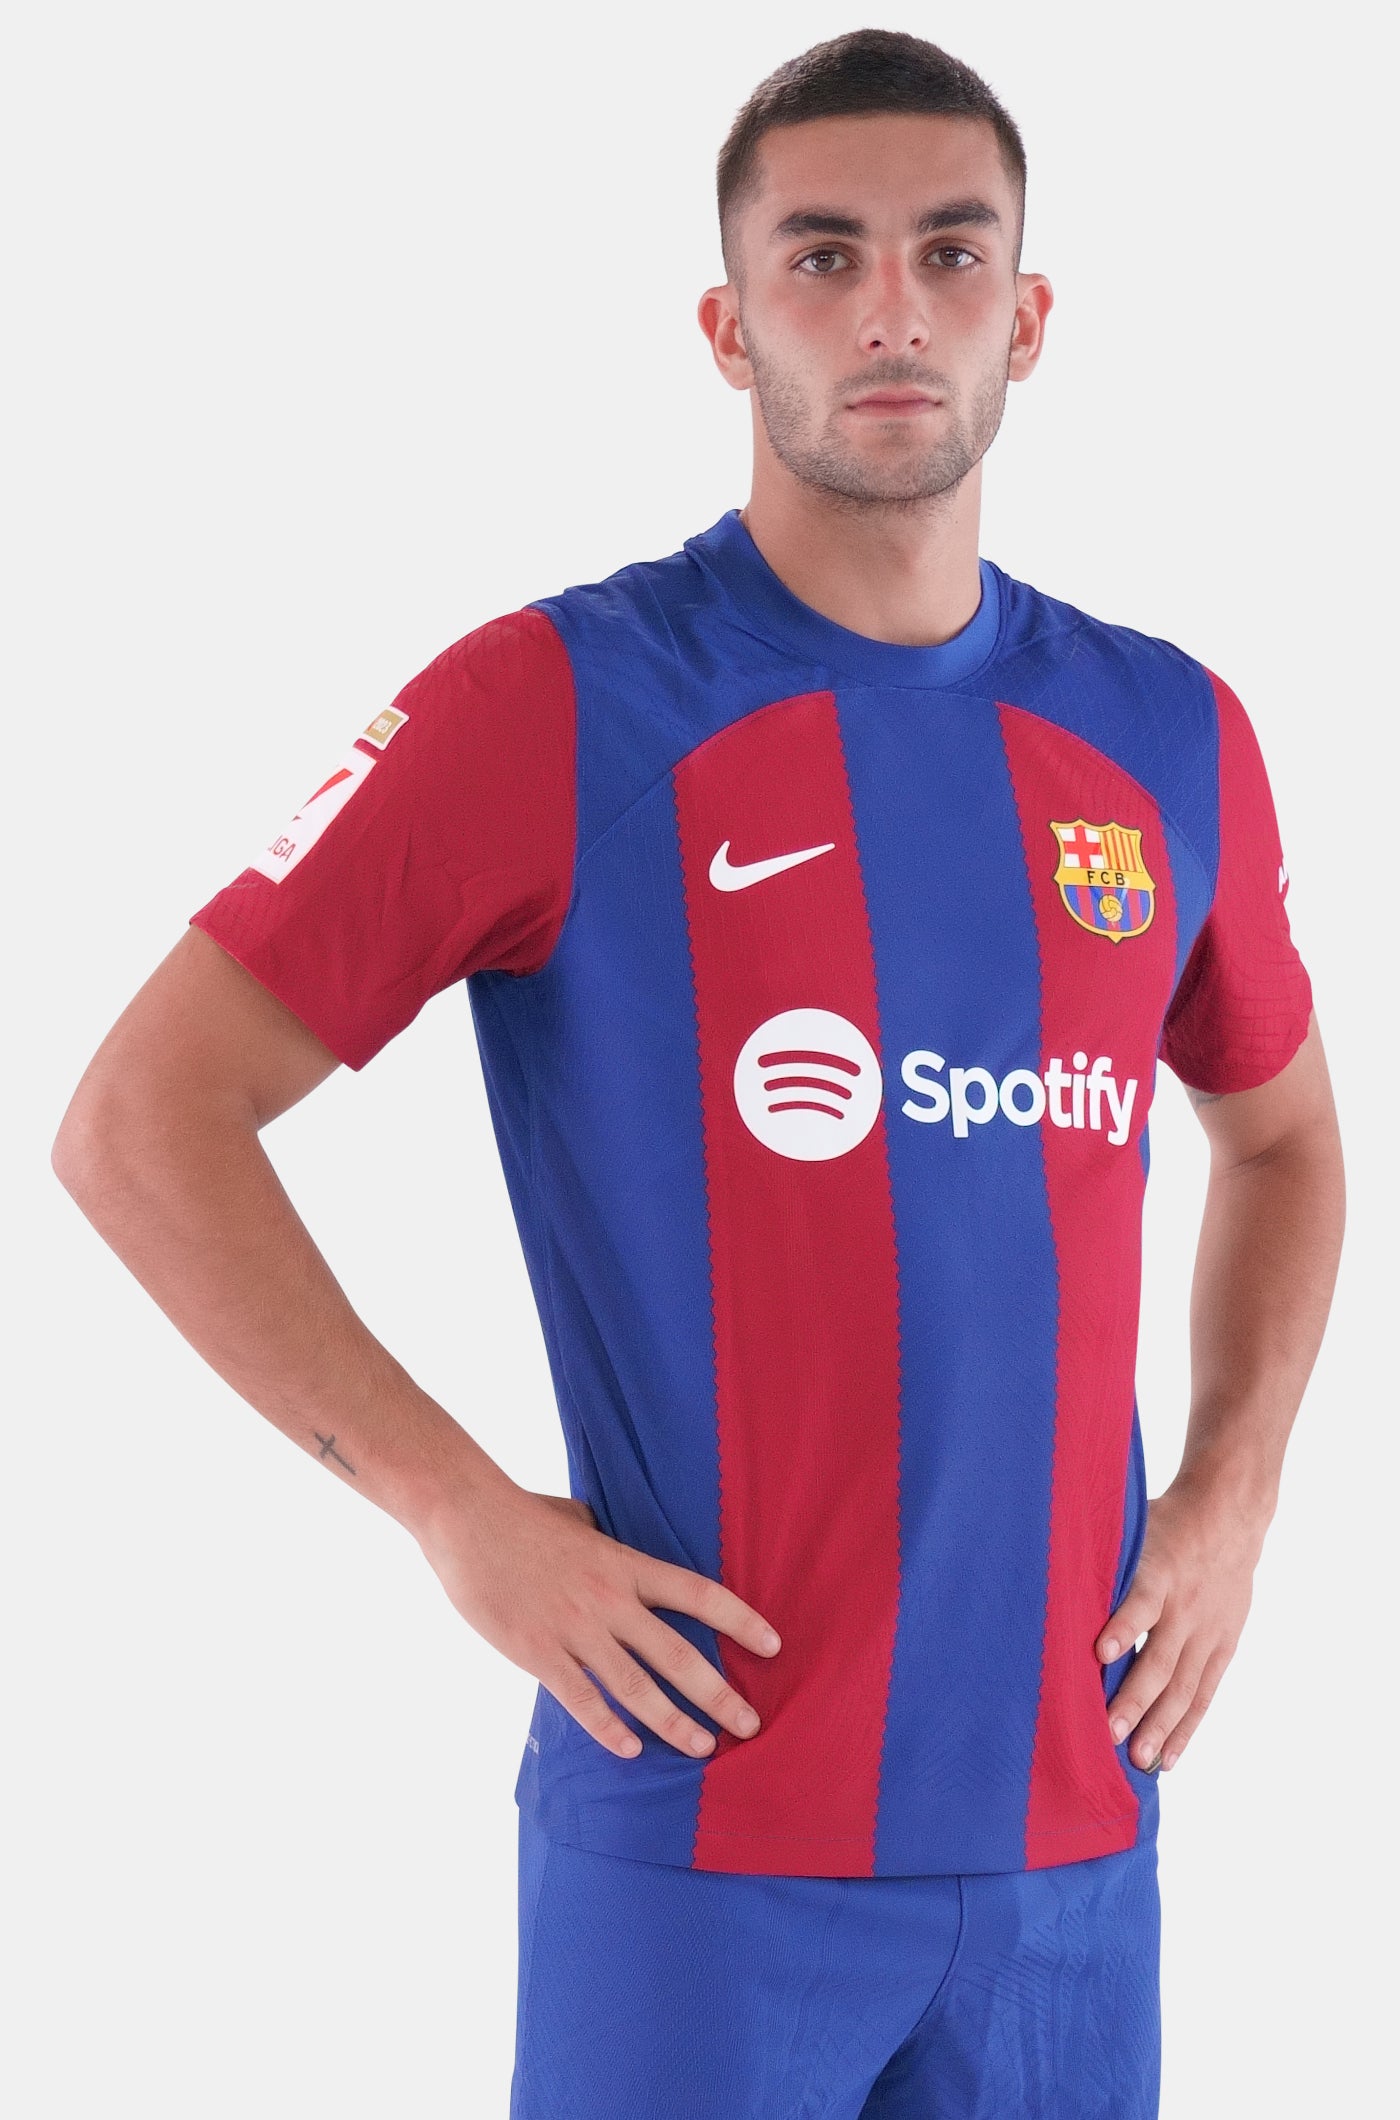 LFP FC Barcelona home shirt 23/24 Player's Edition - FERRAN